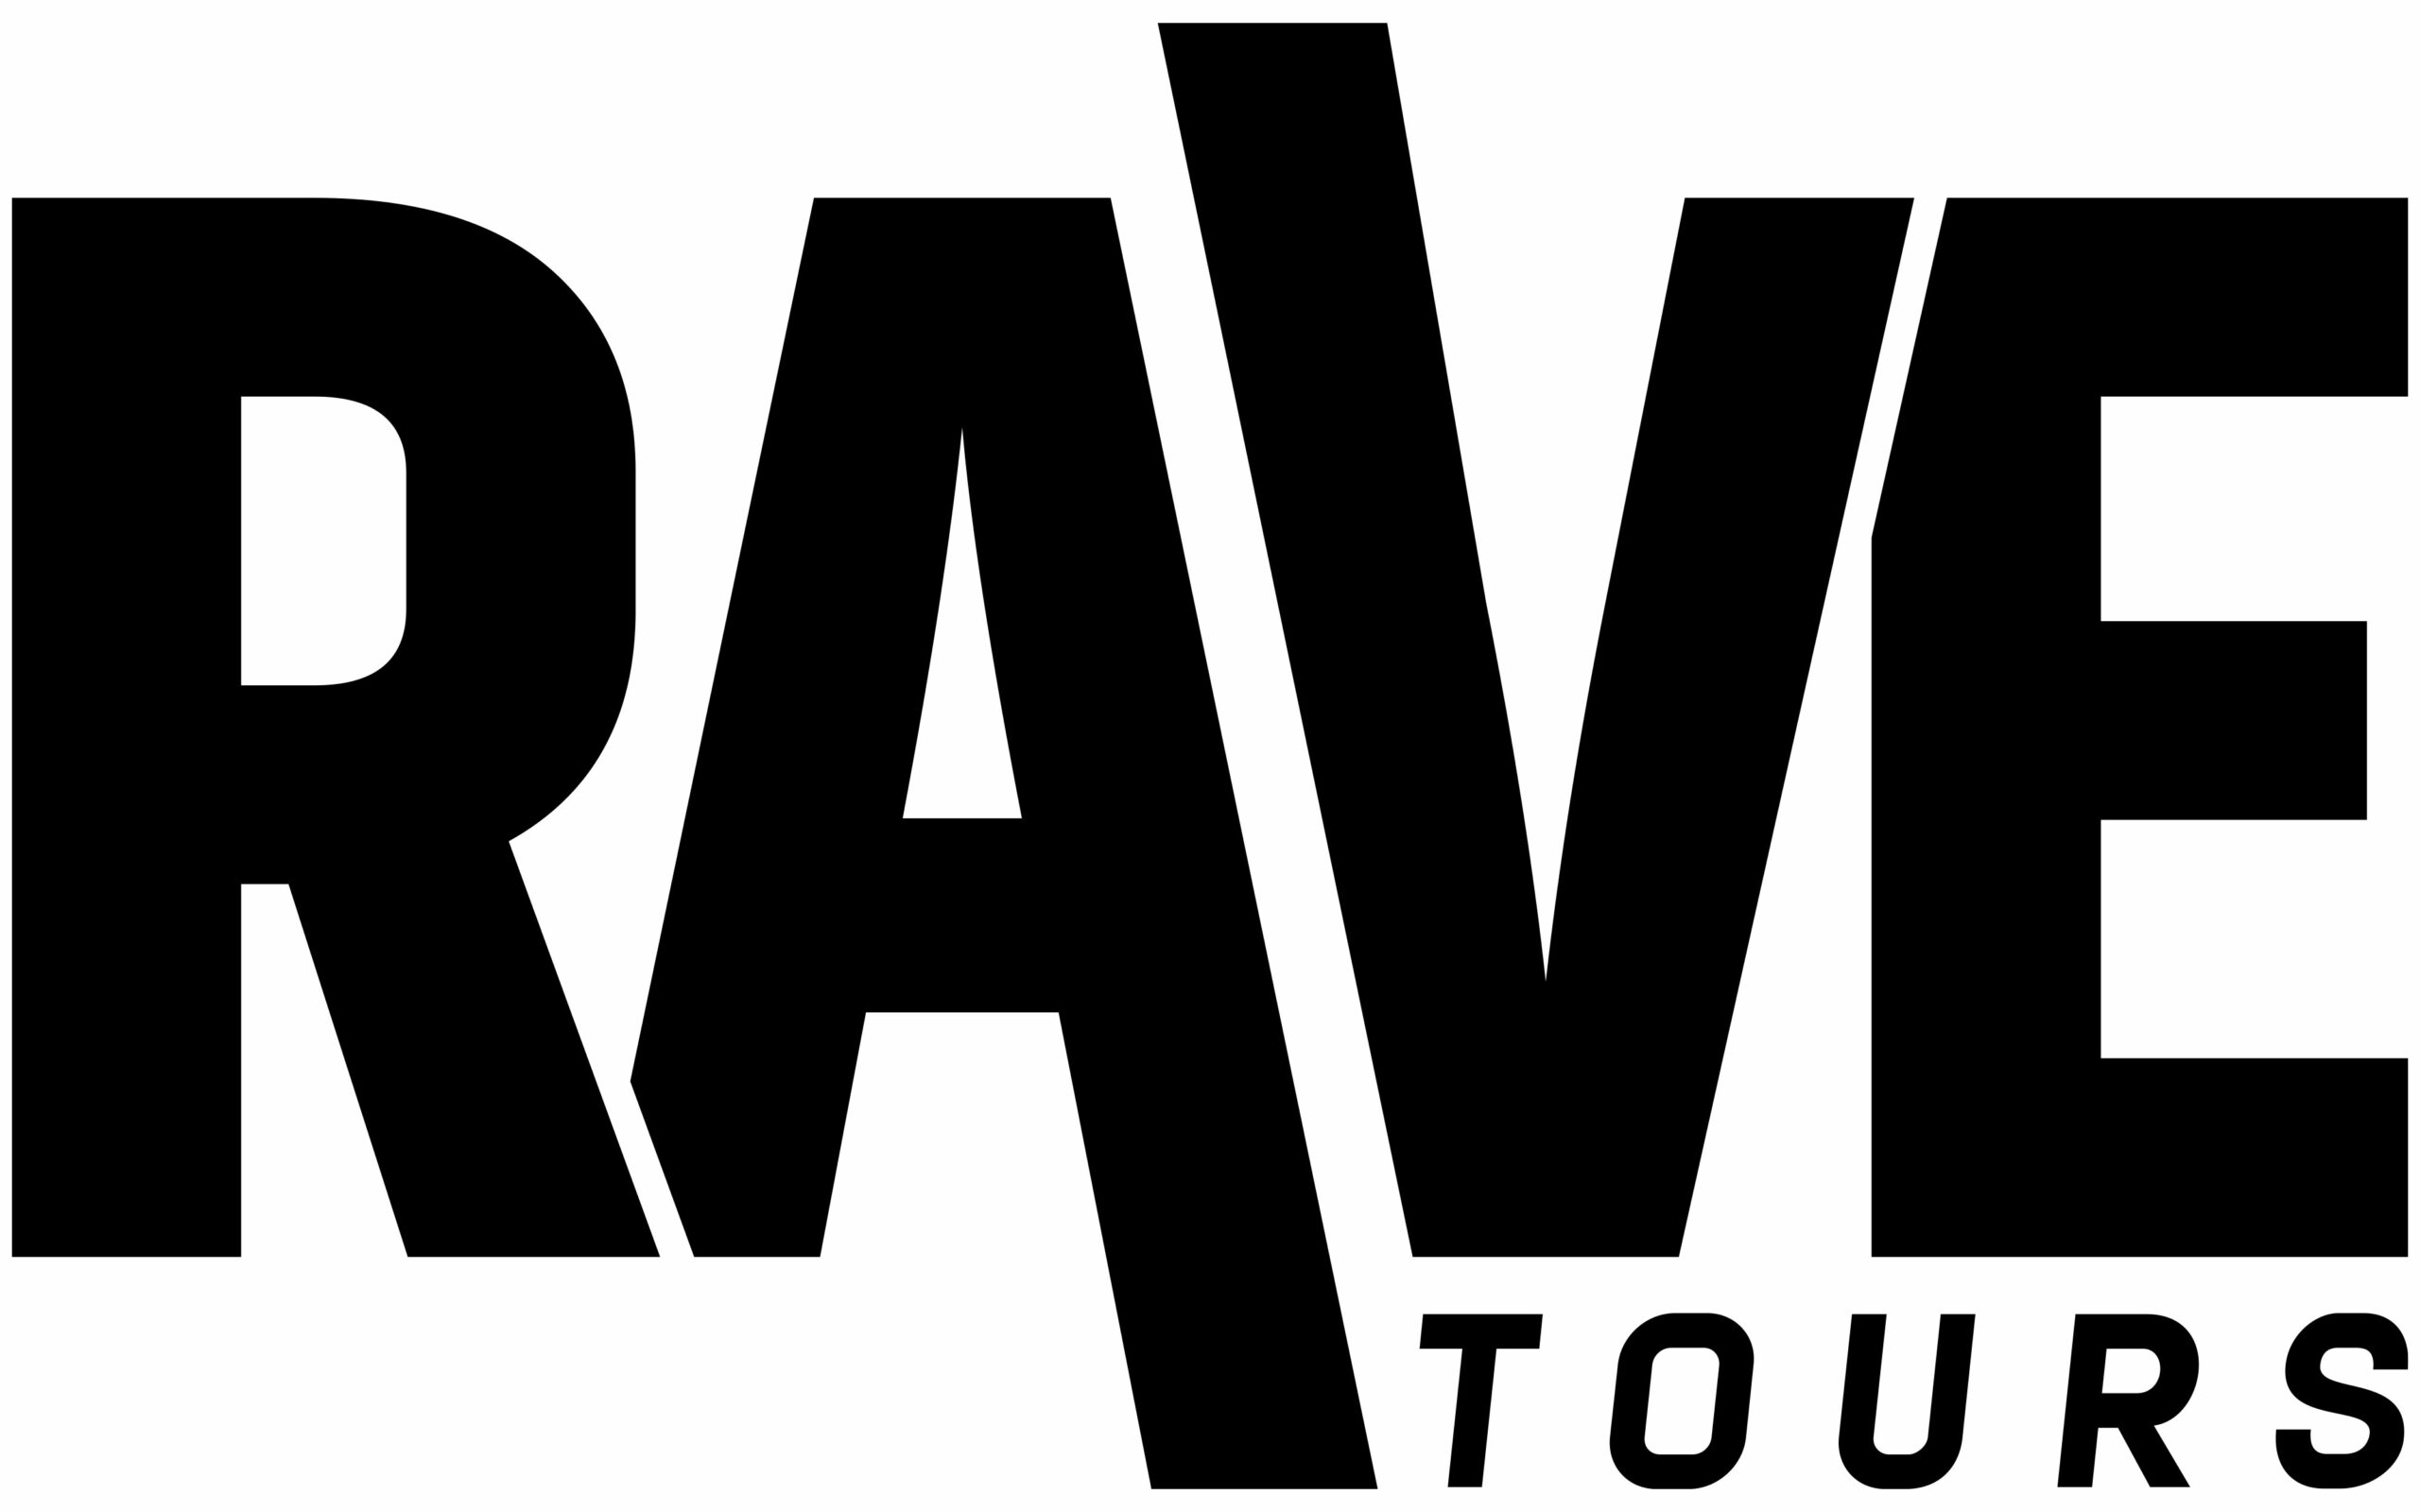 Rave Tours